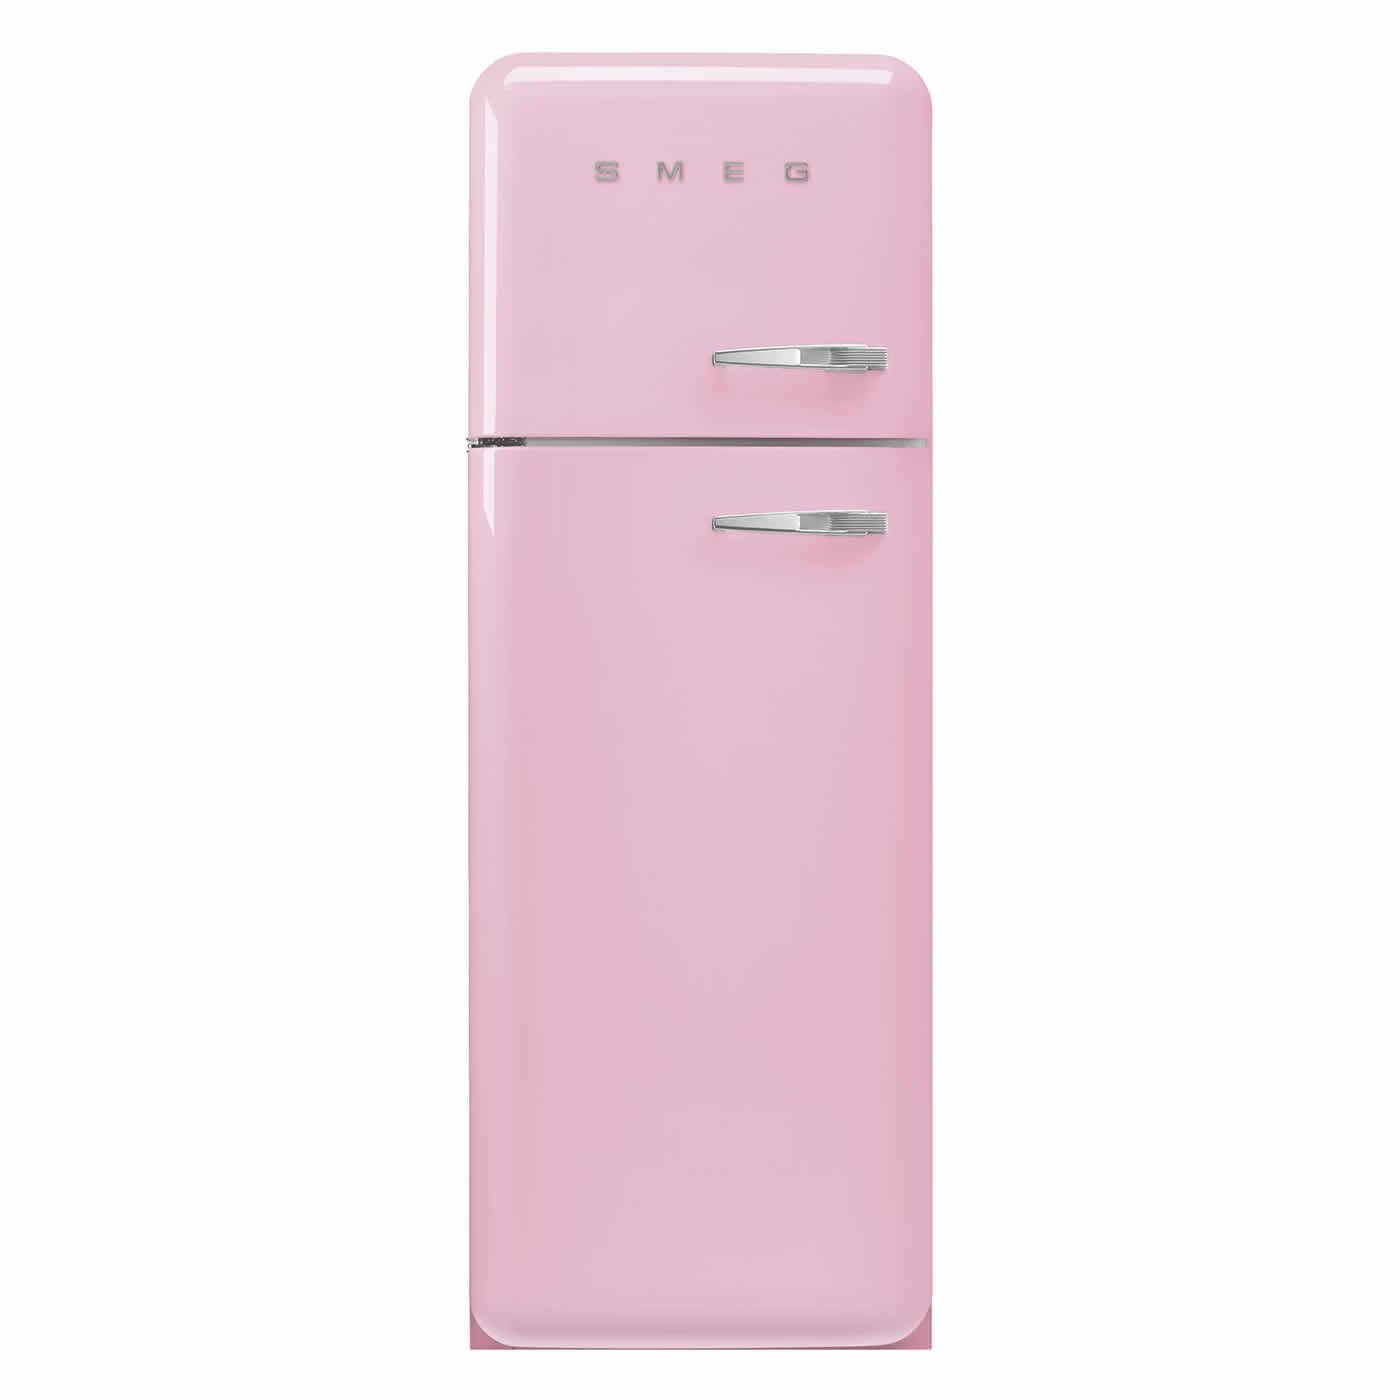 Smeg 294litre 1950s Retro Style Fridge Freezer Pink